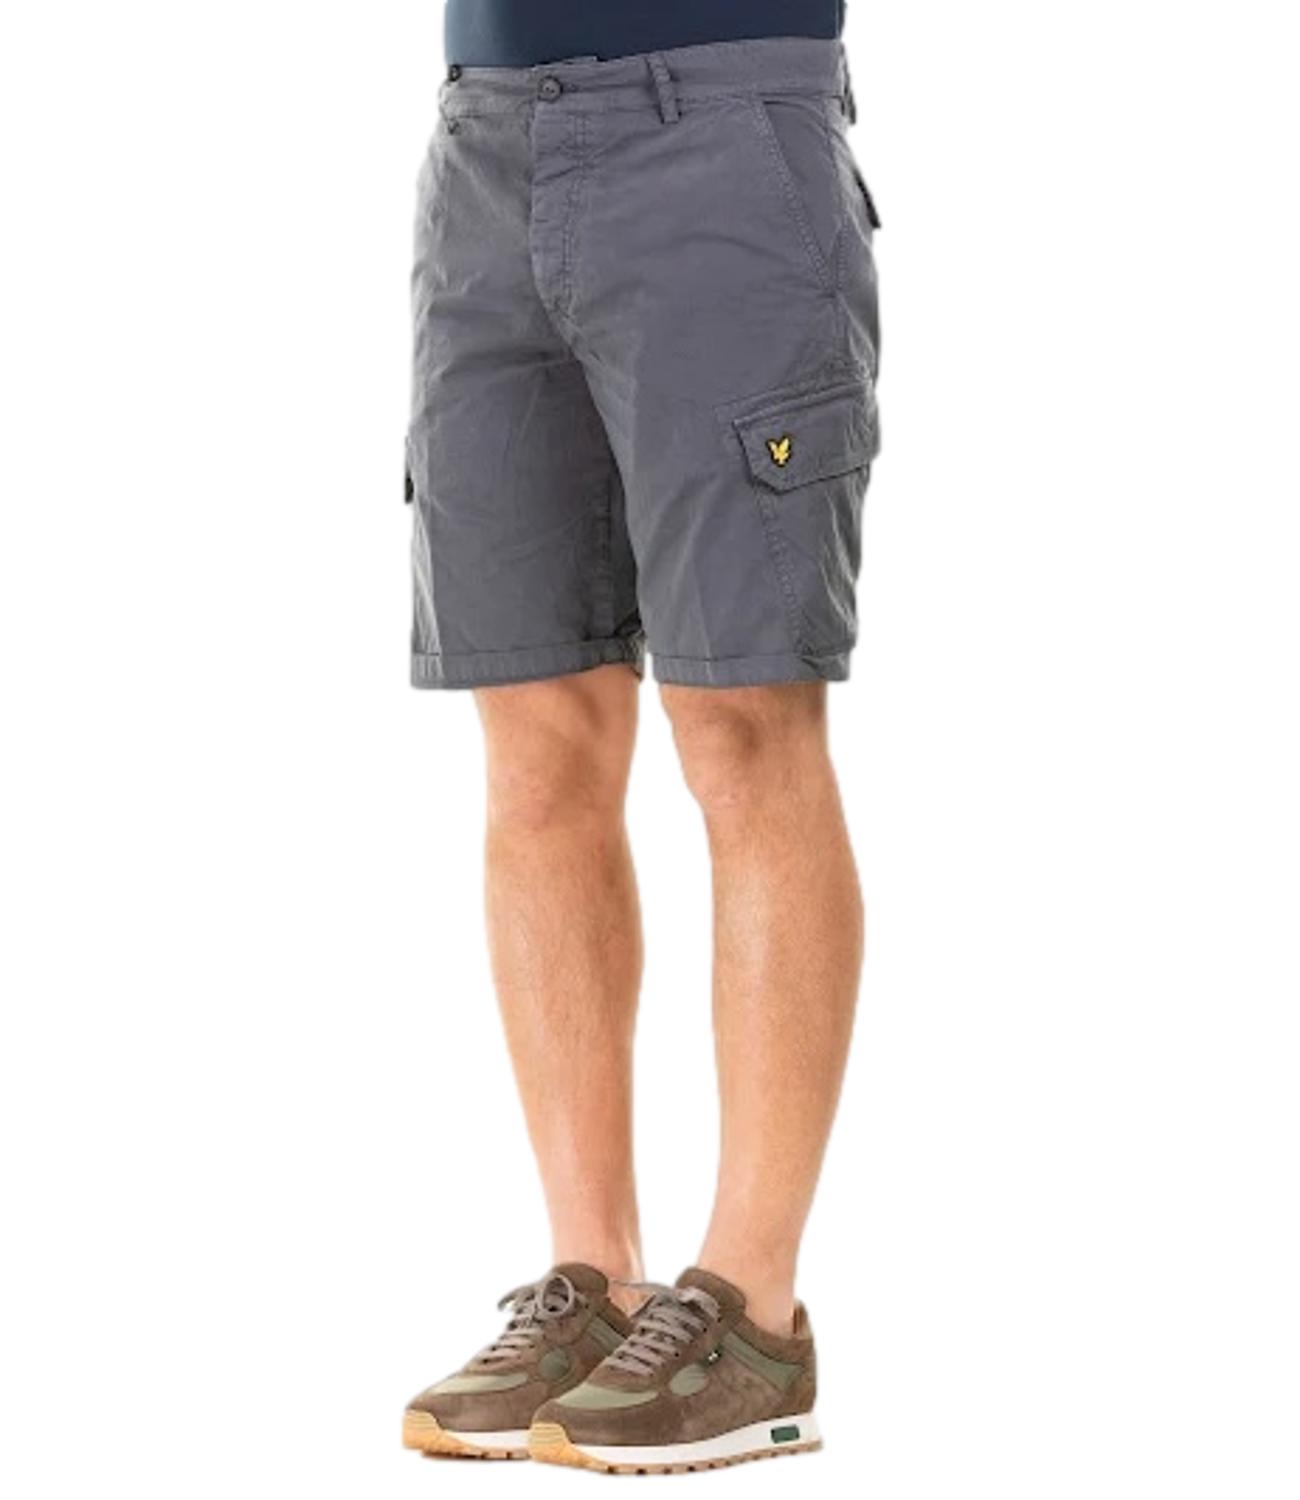 Gray men's cargo shorts